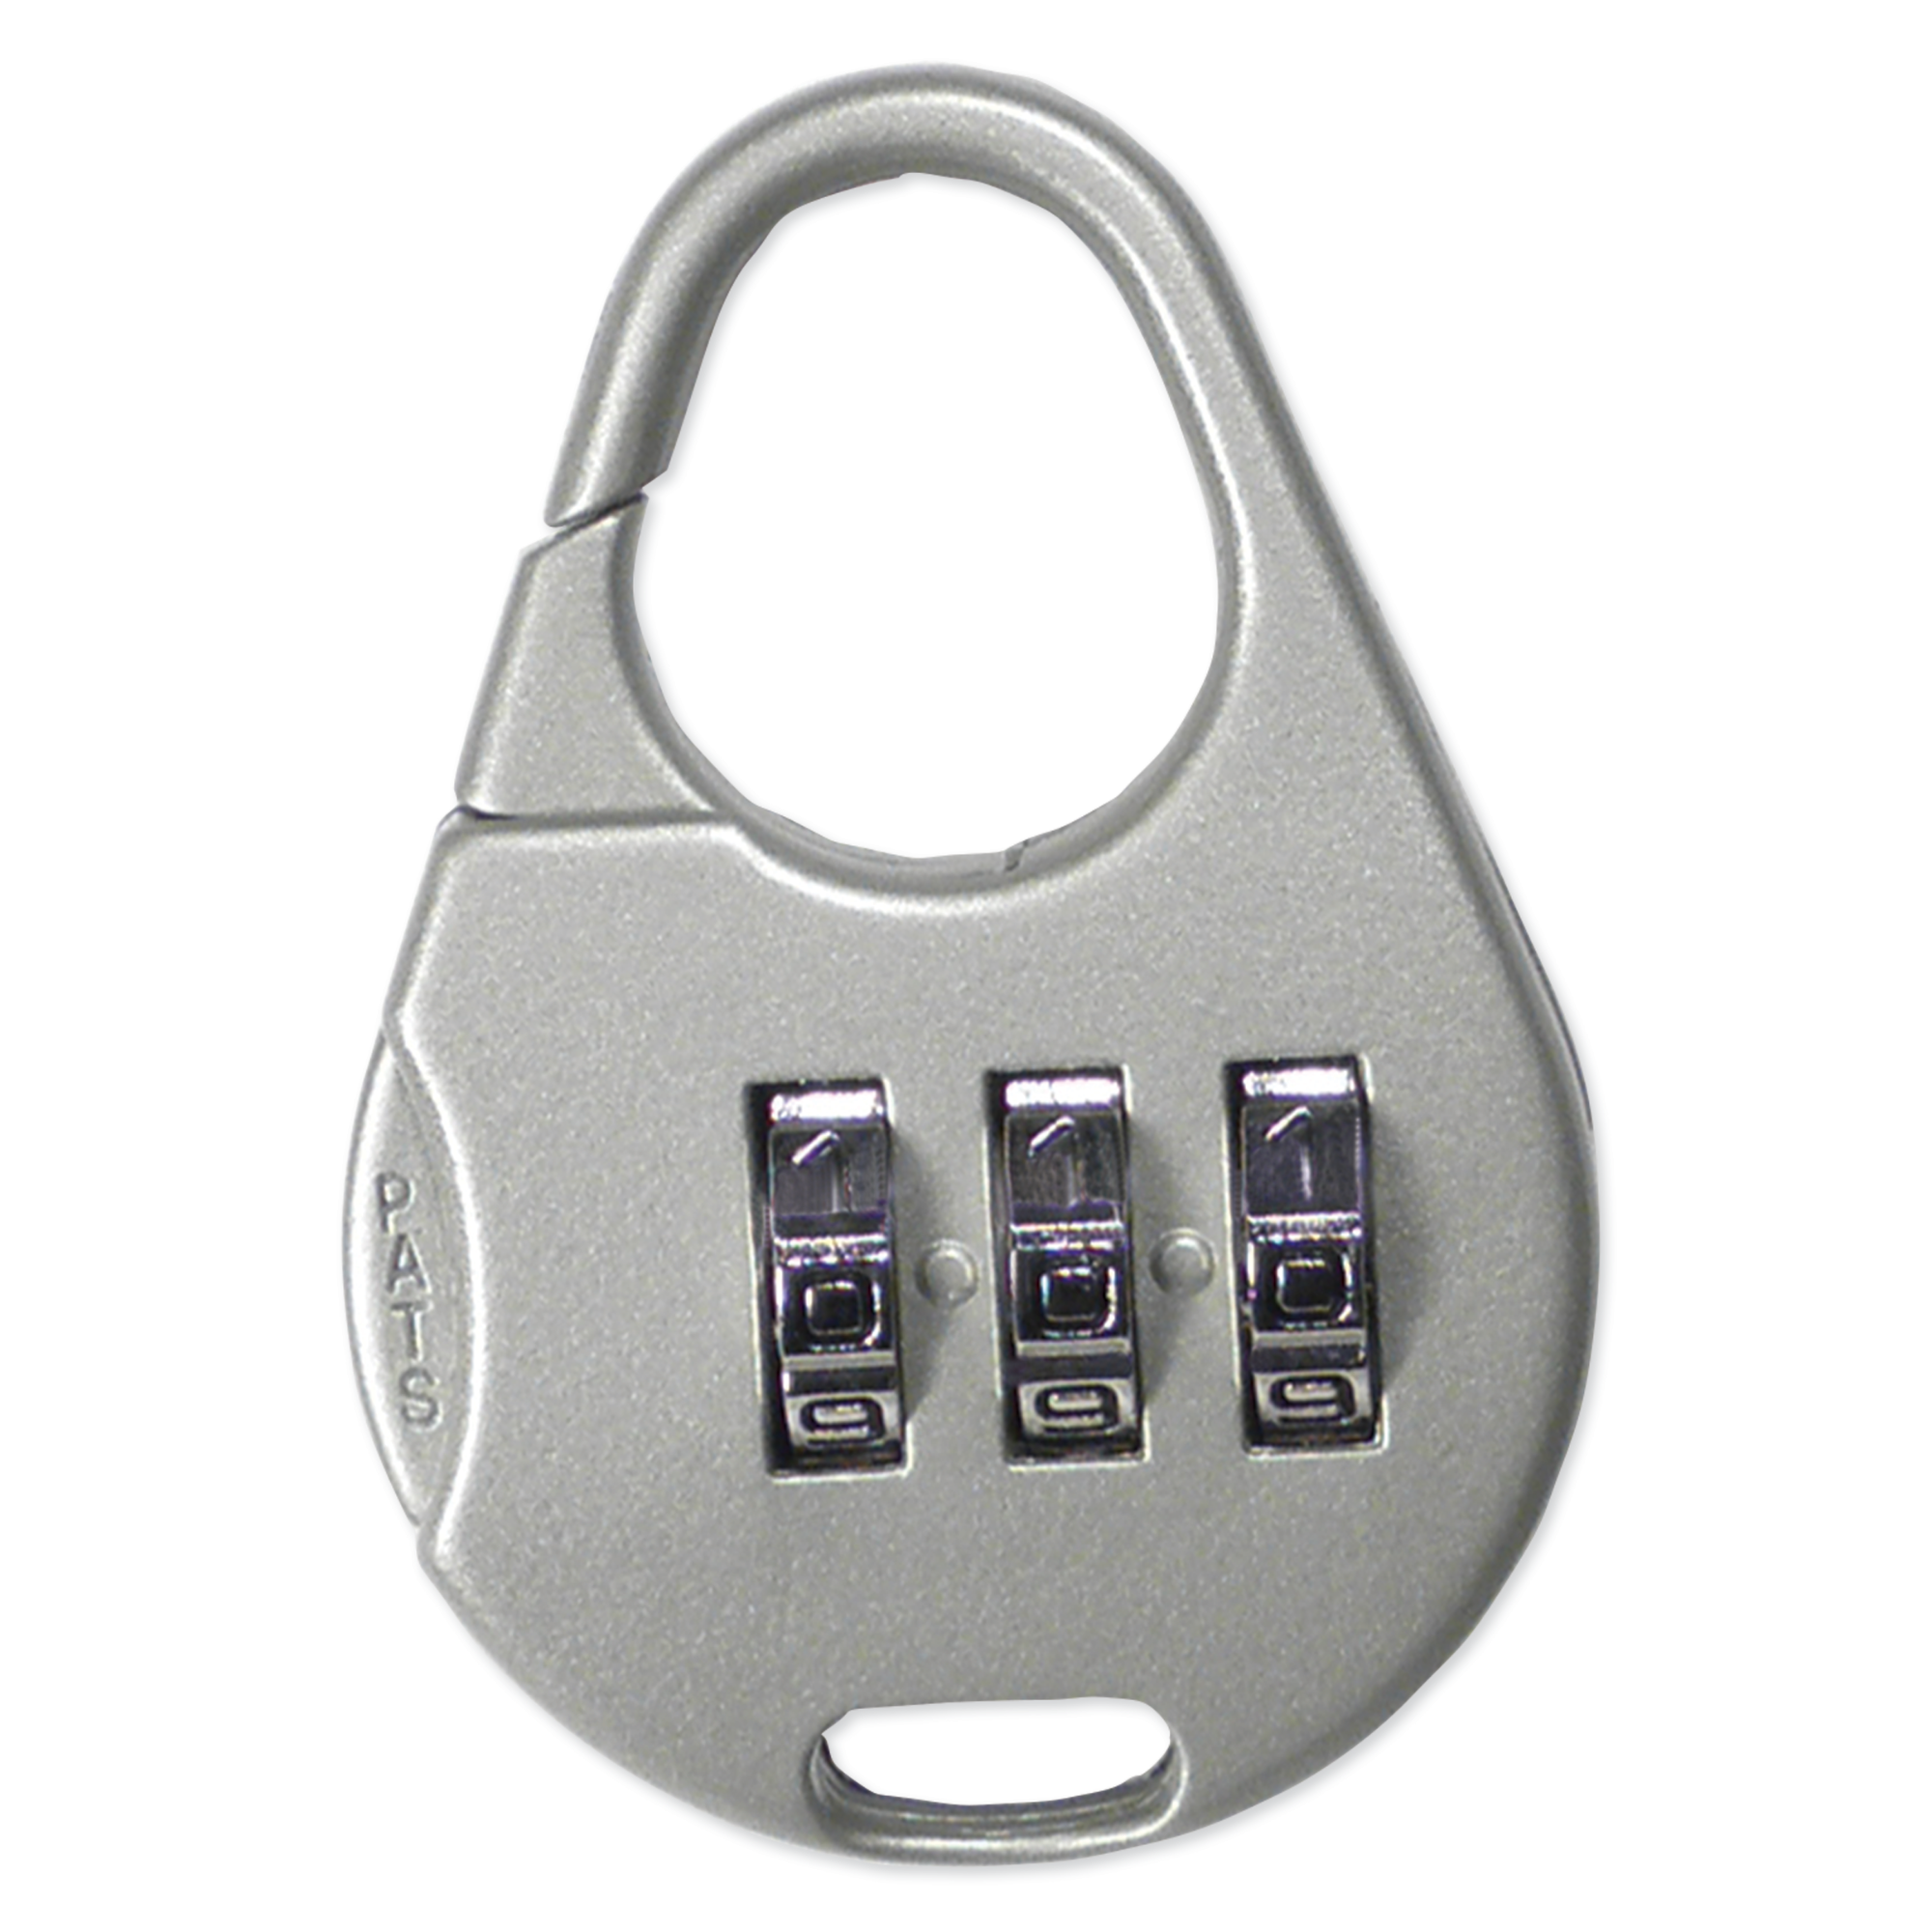 Combination Lock